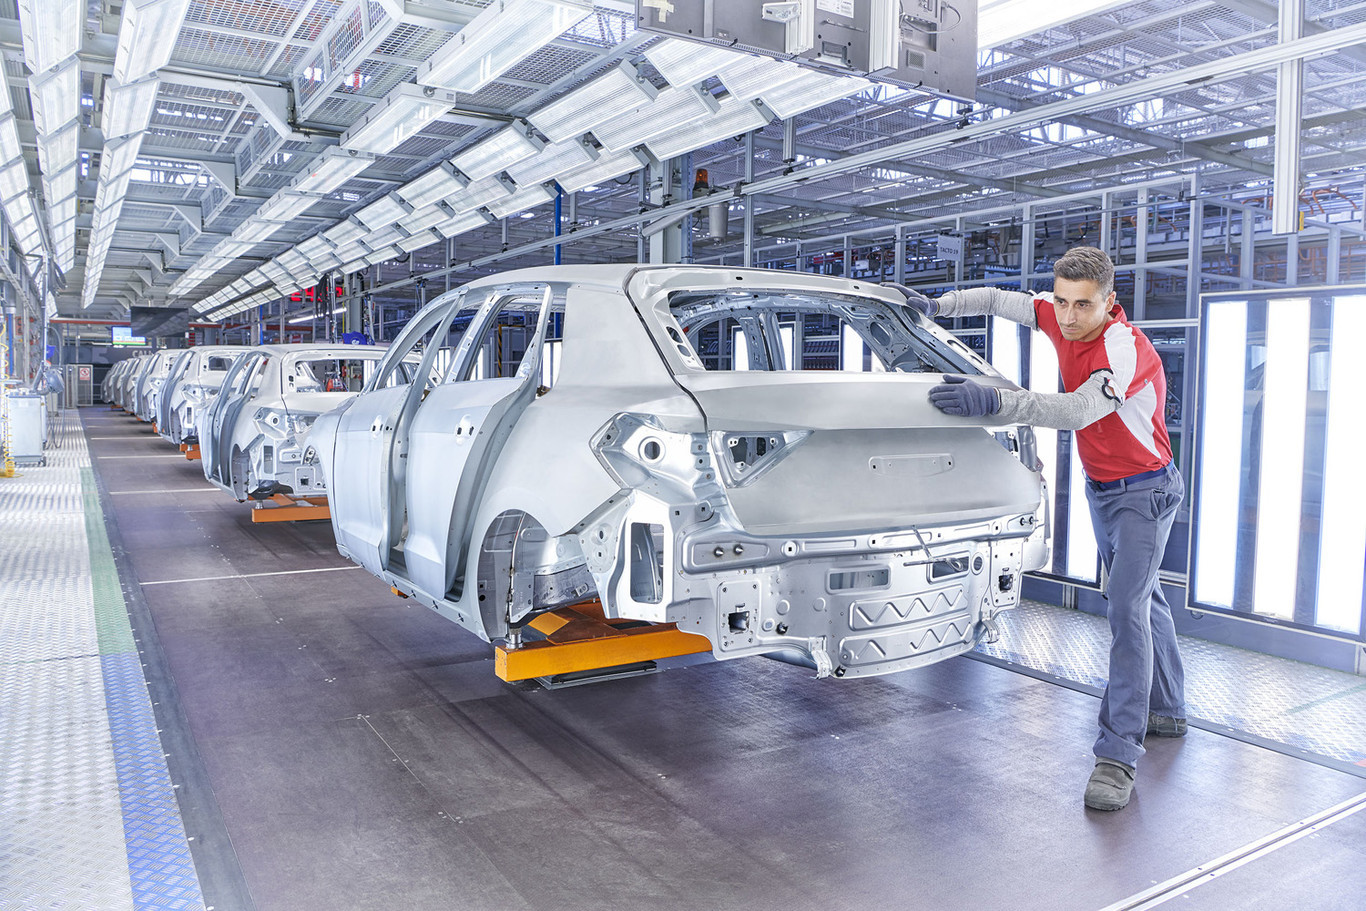 Juarez sees opportunity in the manufacture of autonomous cars